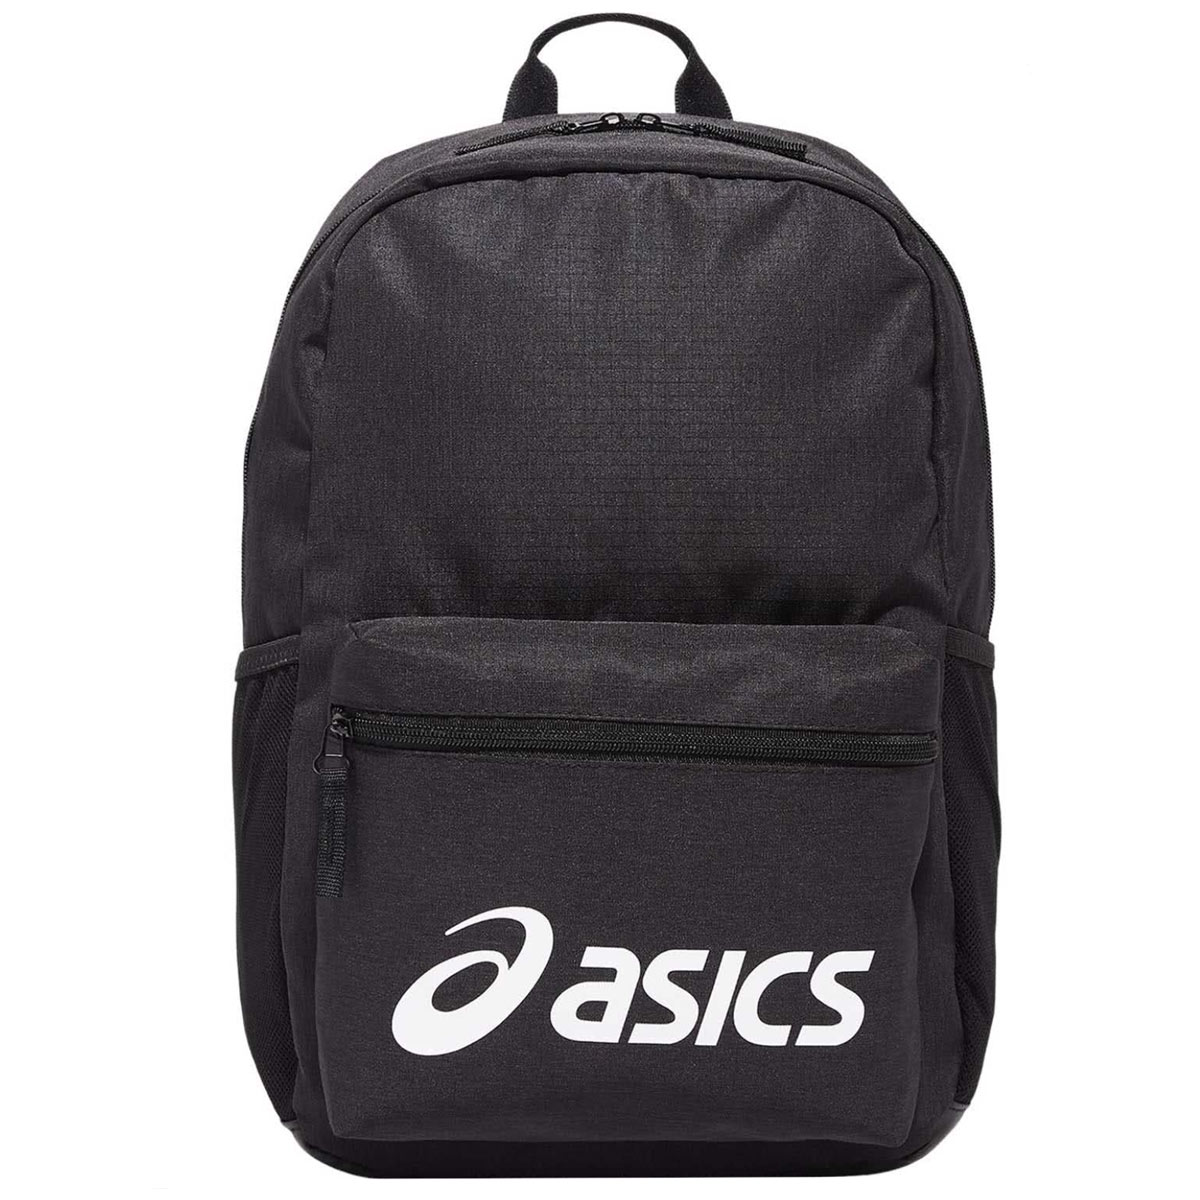 Asics Backpack Sport Backpack black